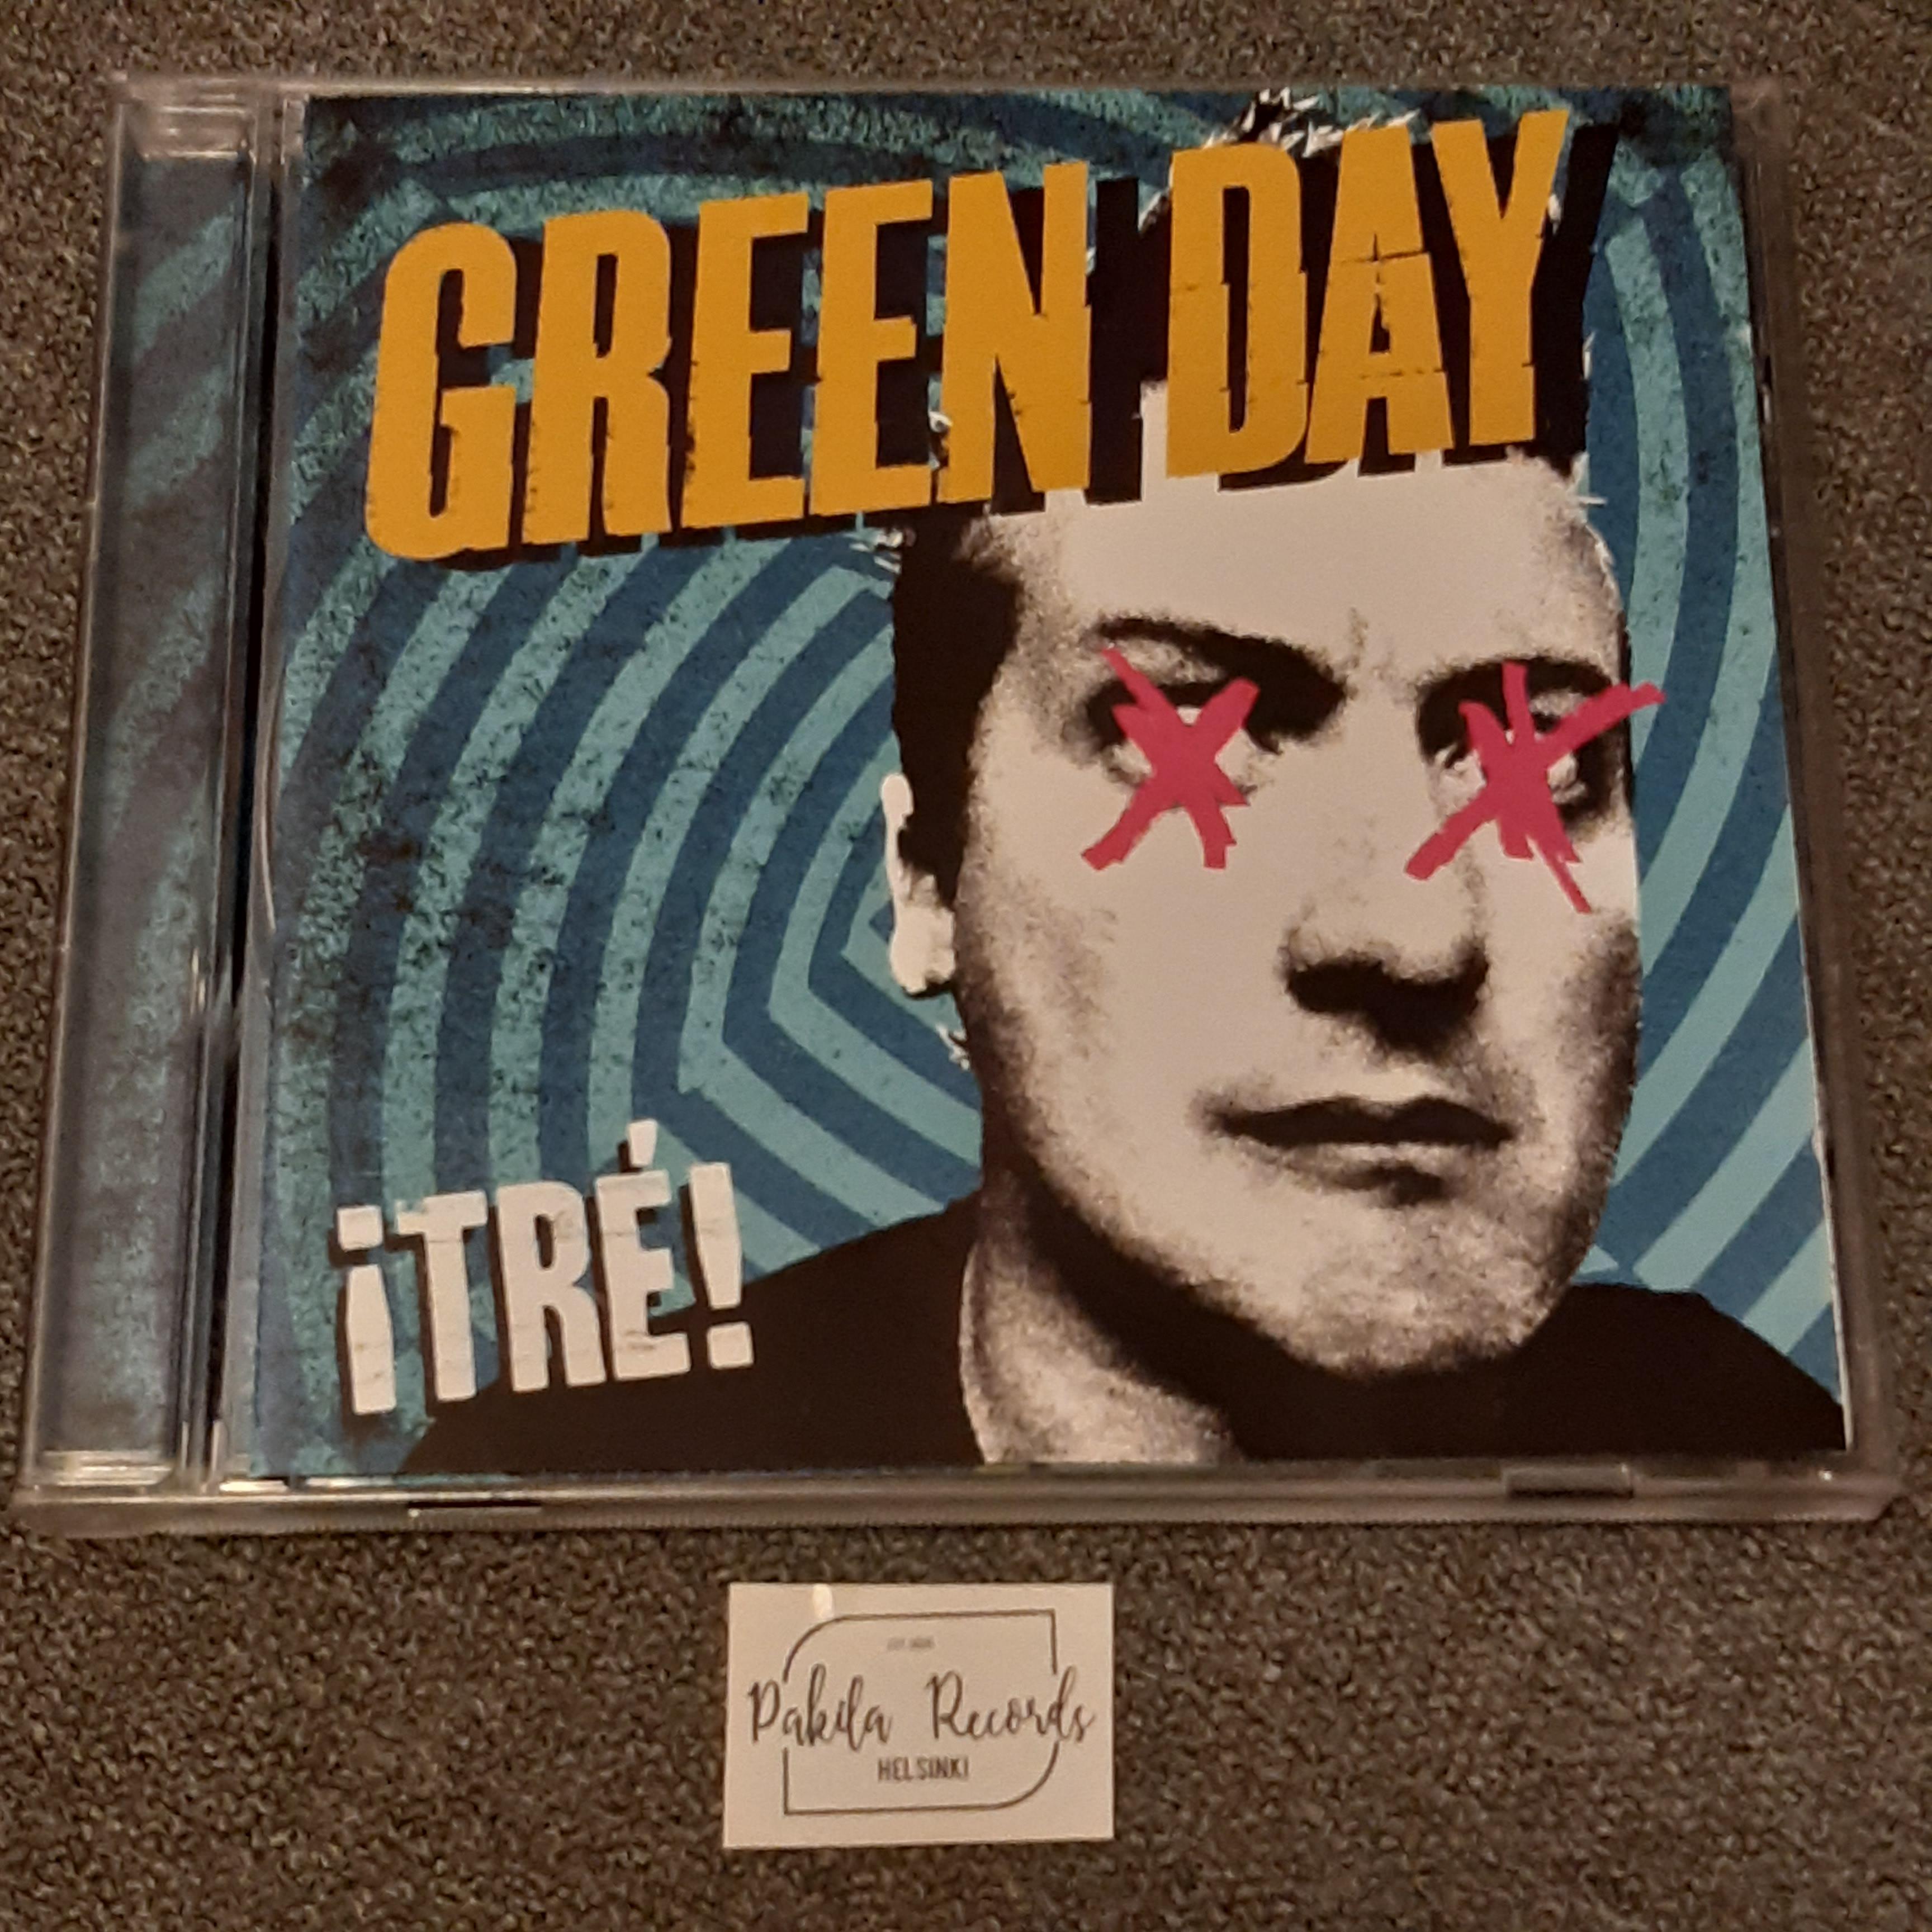 Green Day - ¡Tré! - CD (käytetty)